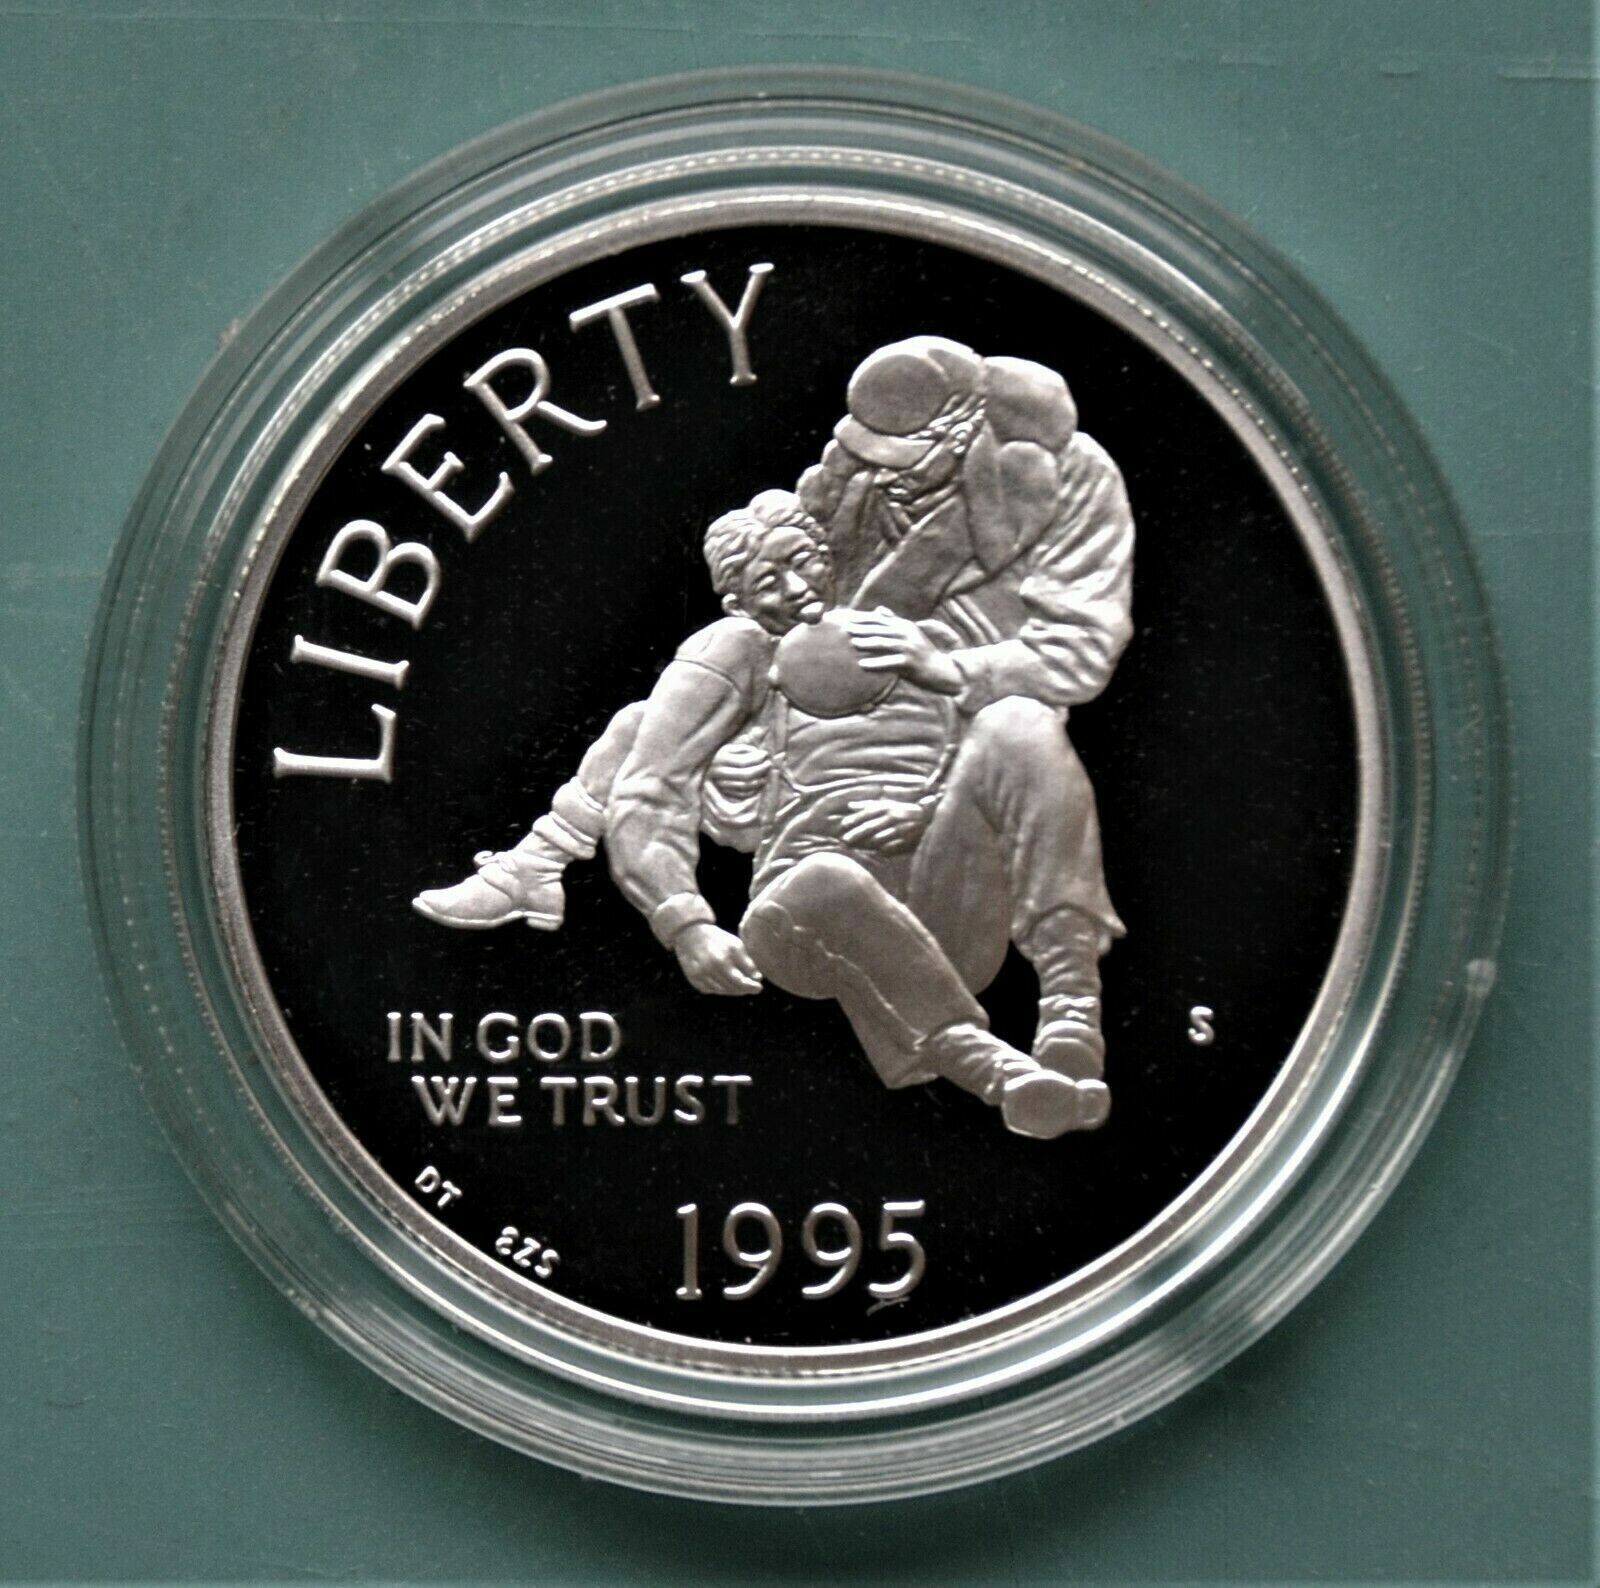 1995 Civil War Battlefield Proof Silver Dollar in capsule